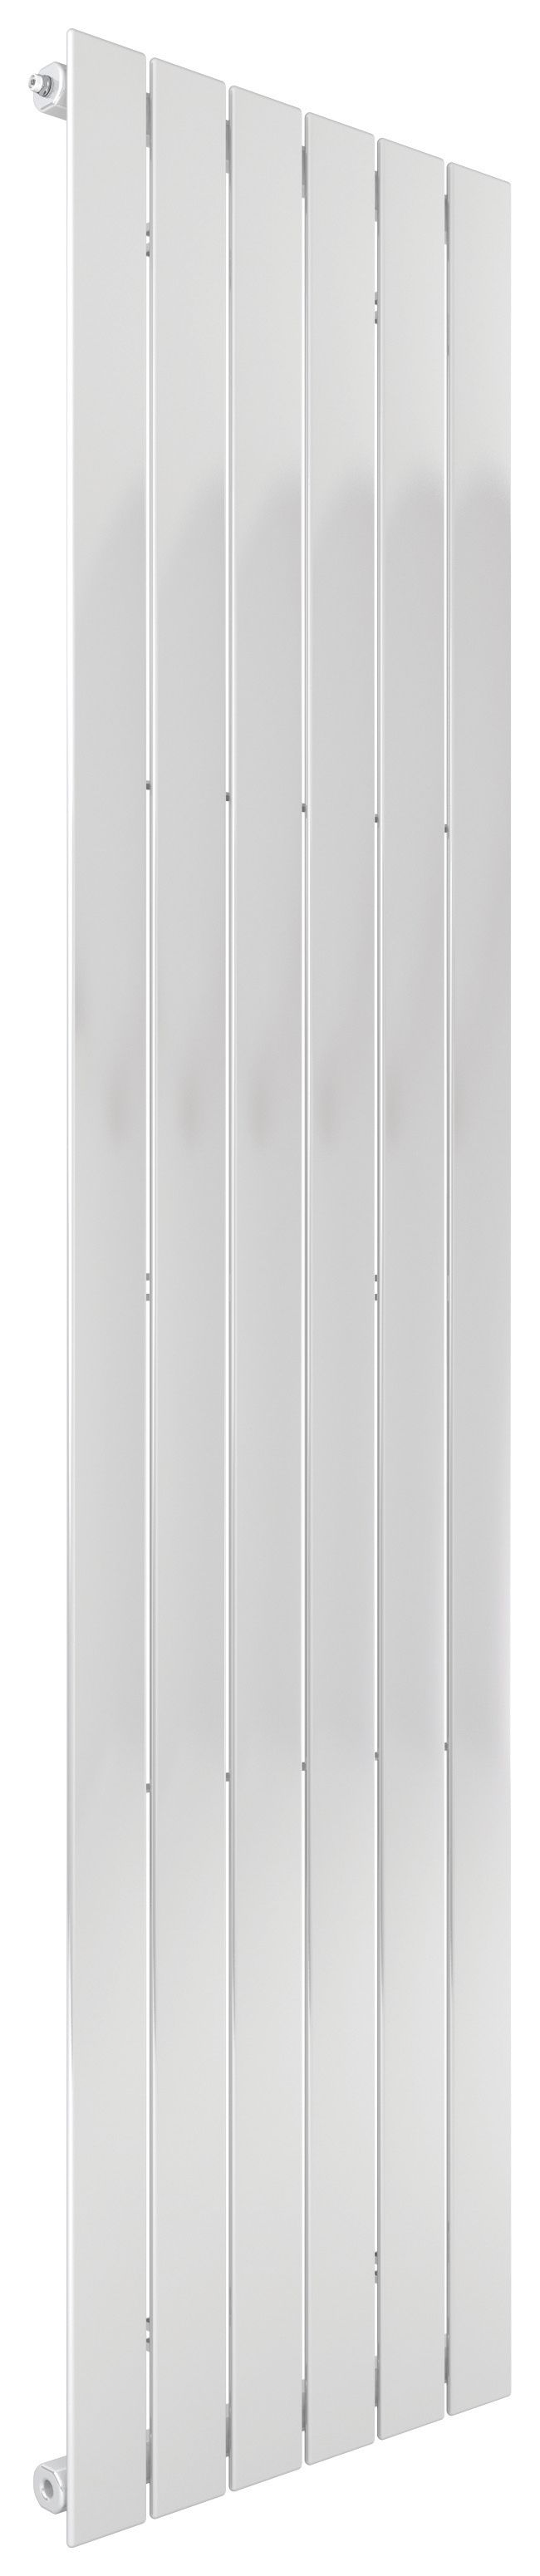 Image of Henrad Verona Vertical Designer Radiator - White 1800 x 588 mm